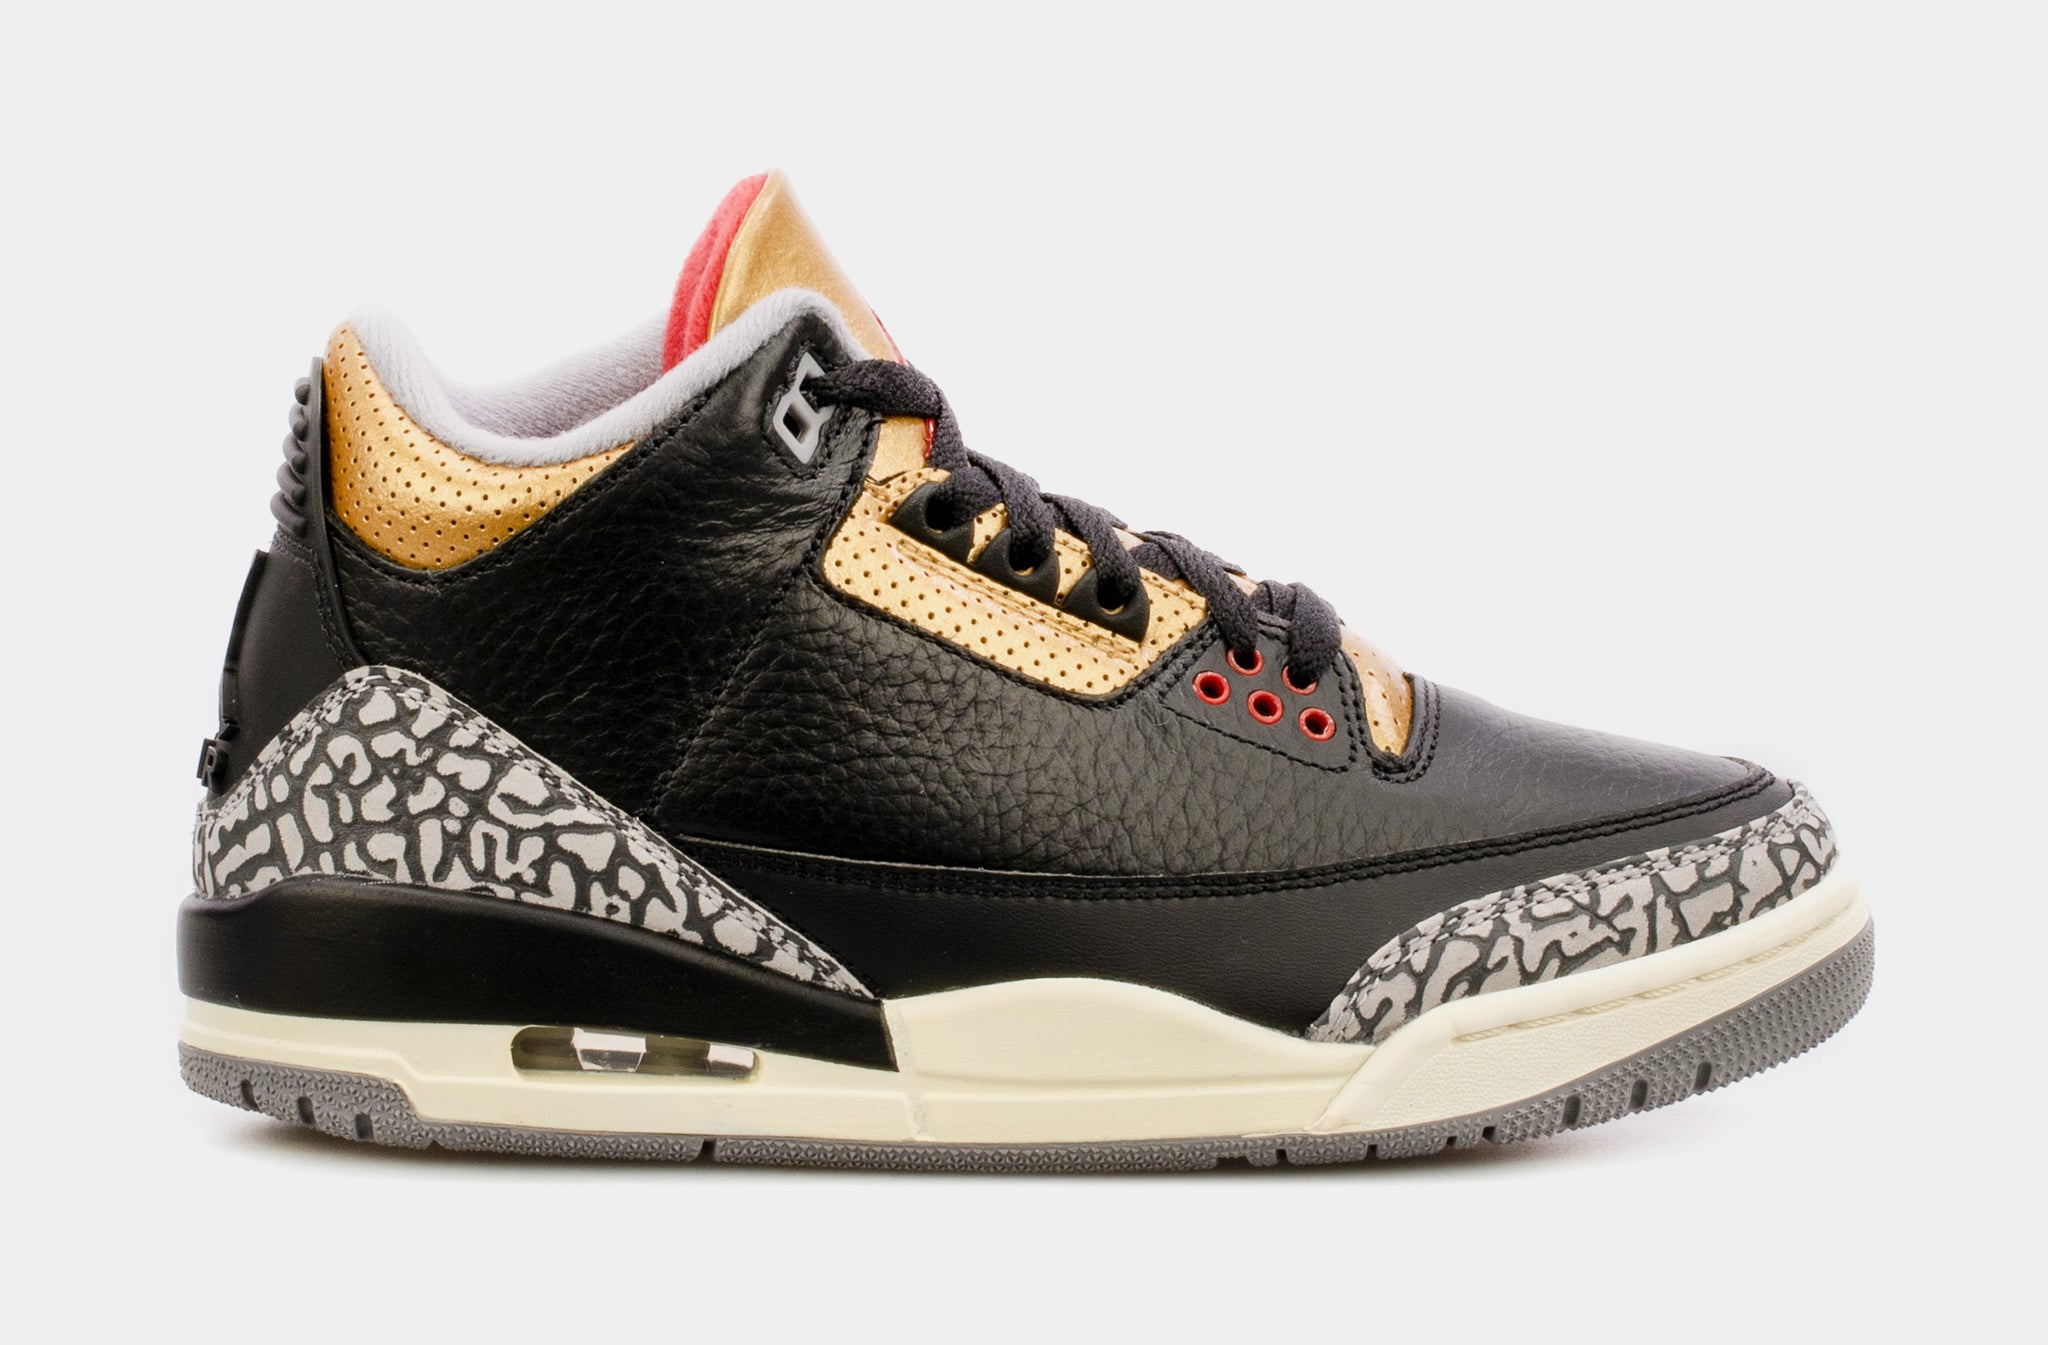 Jordan Air Jordan 3 Retro Black Gold Womens Lifestyle Shoes Black